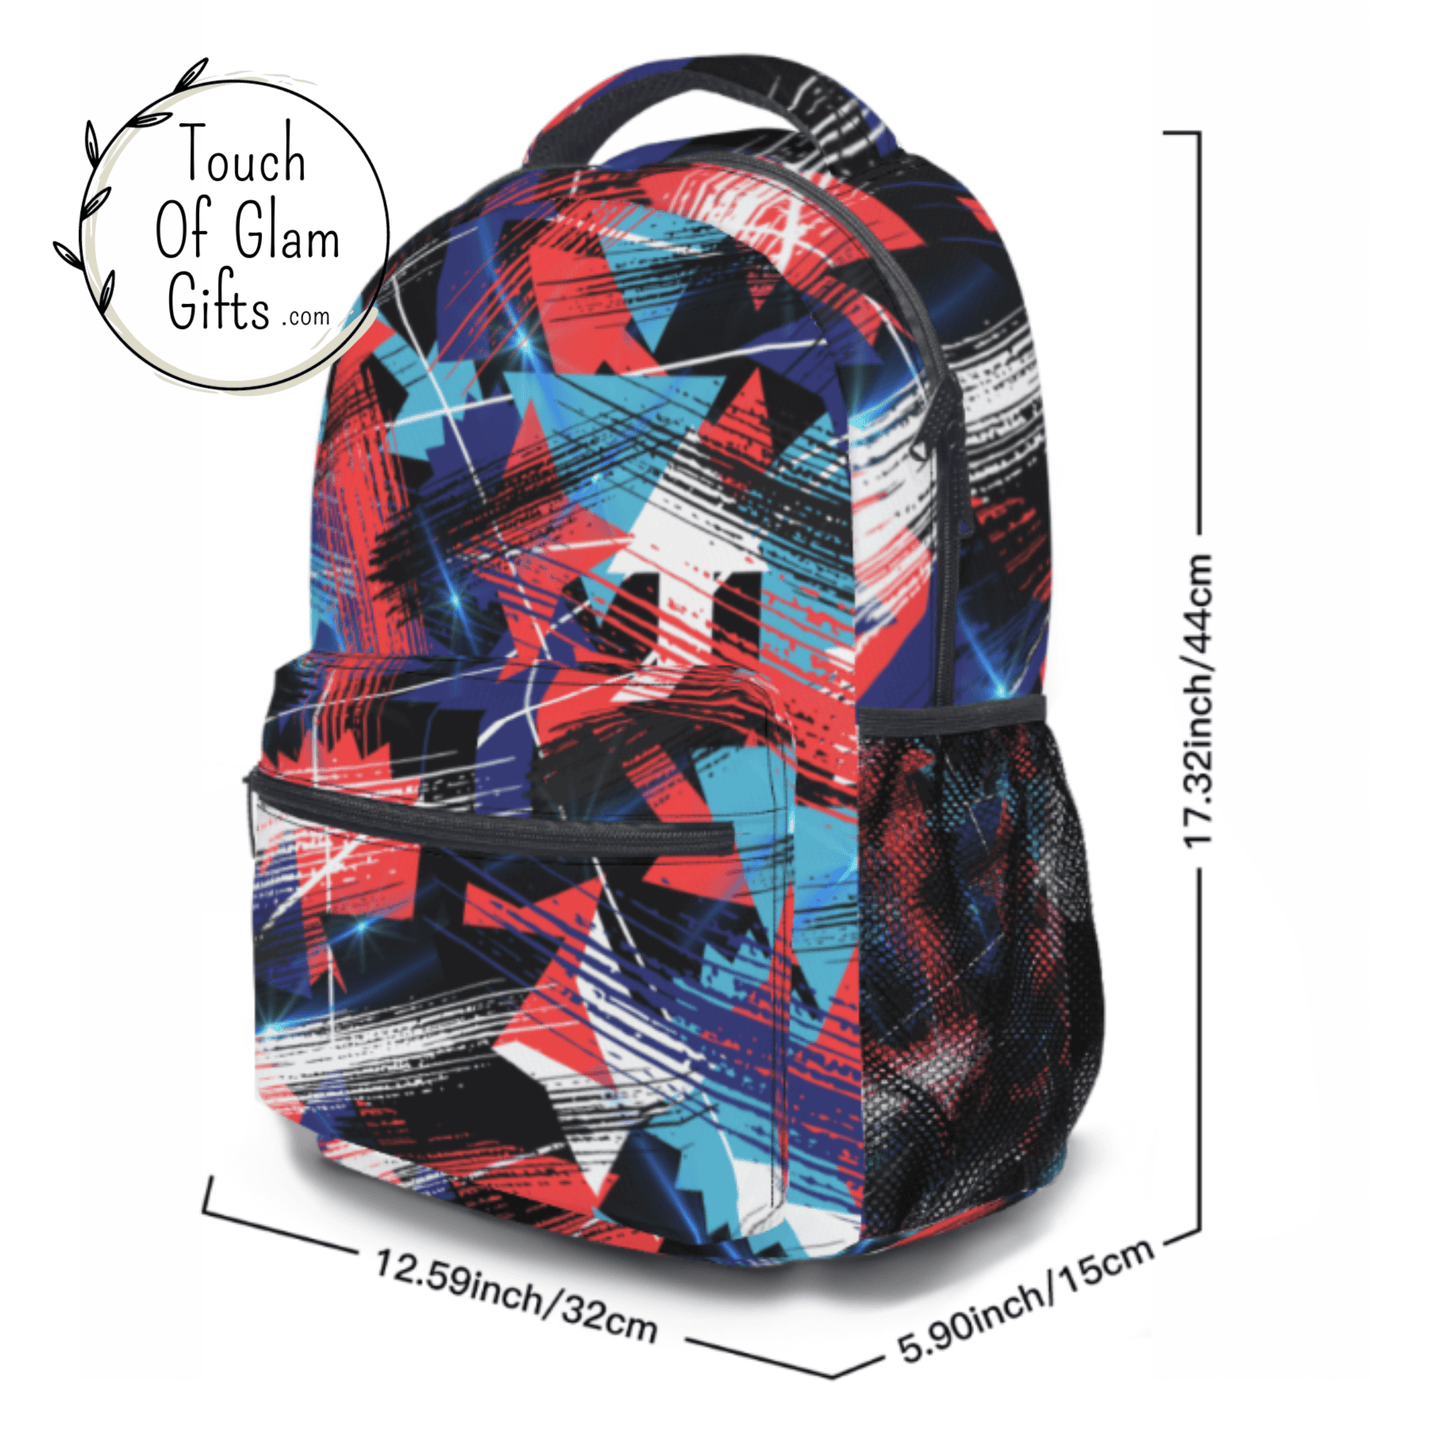 Custom Backpack For Teens: Black, Red & Turquoise Geo Design